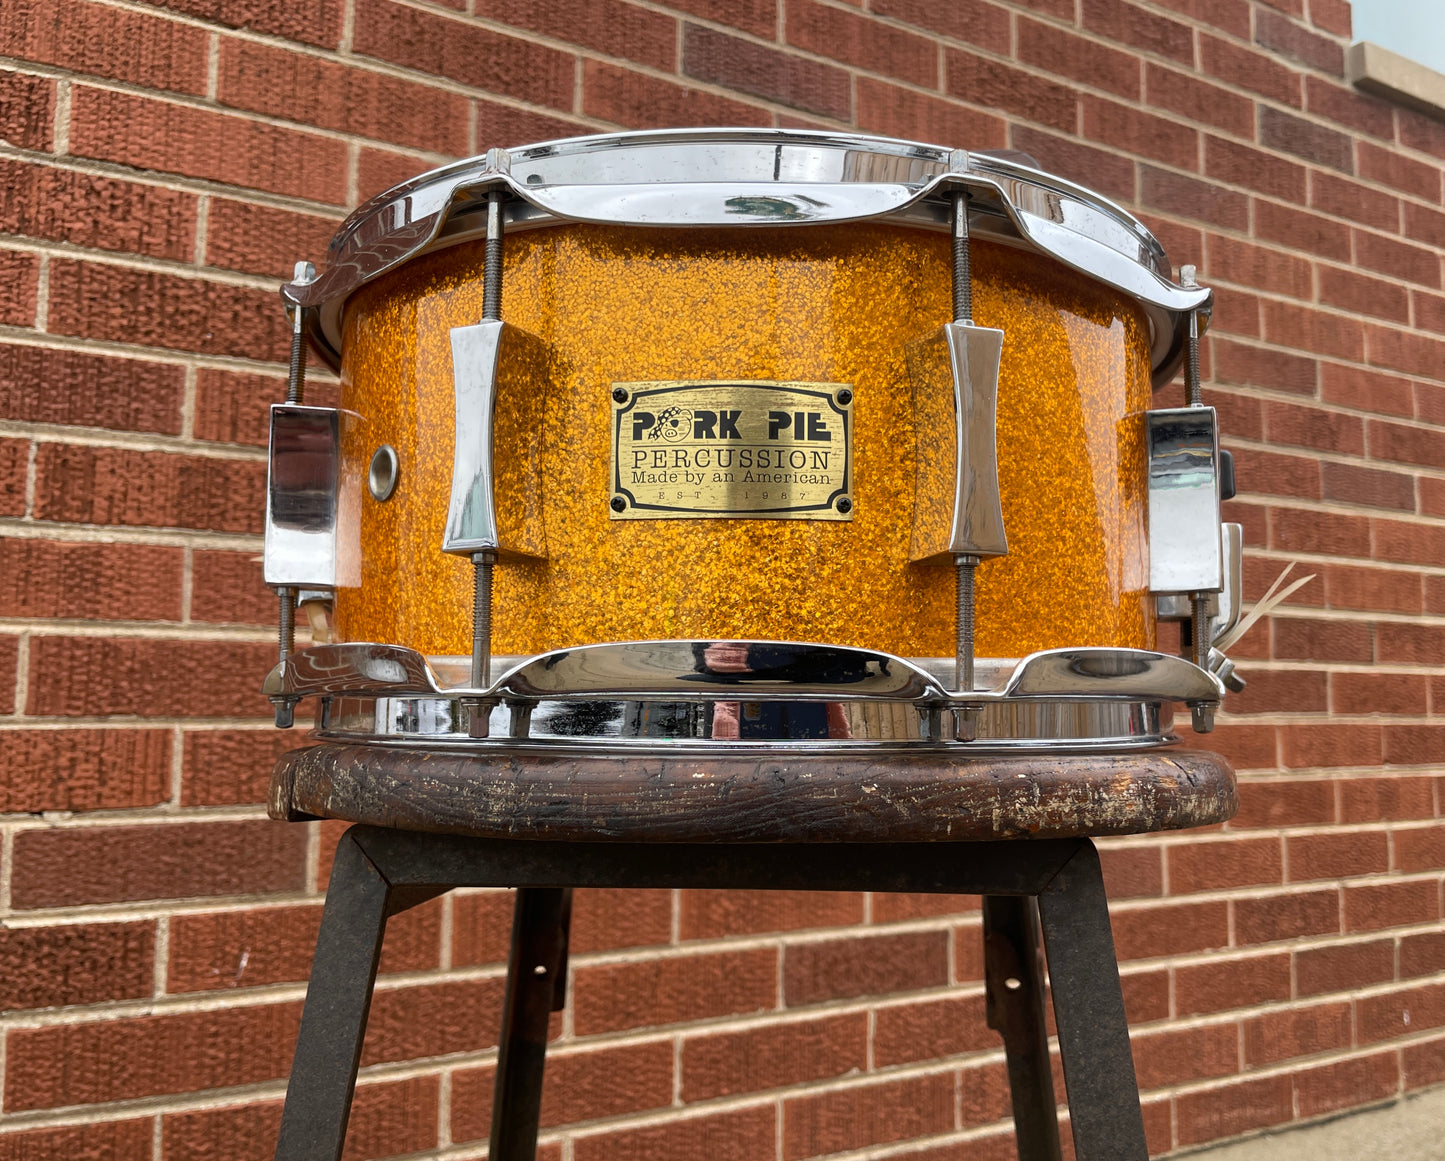 2001 Pork Pie 6x12 USA Custom Maple Snare Drum Gold Sparkle